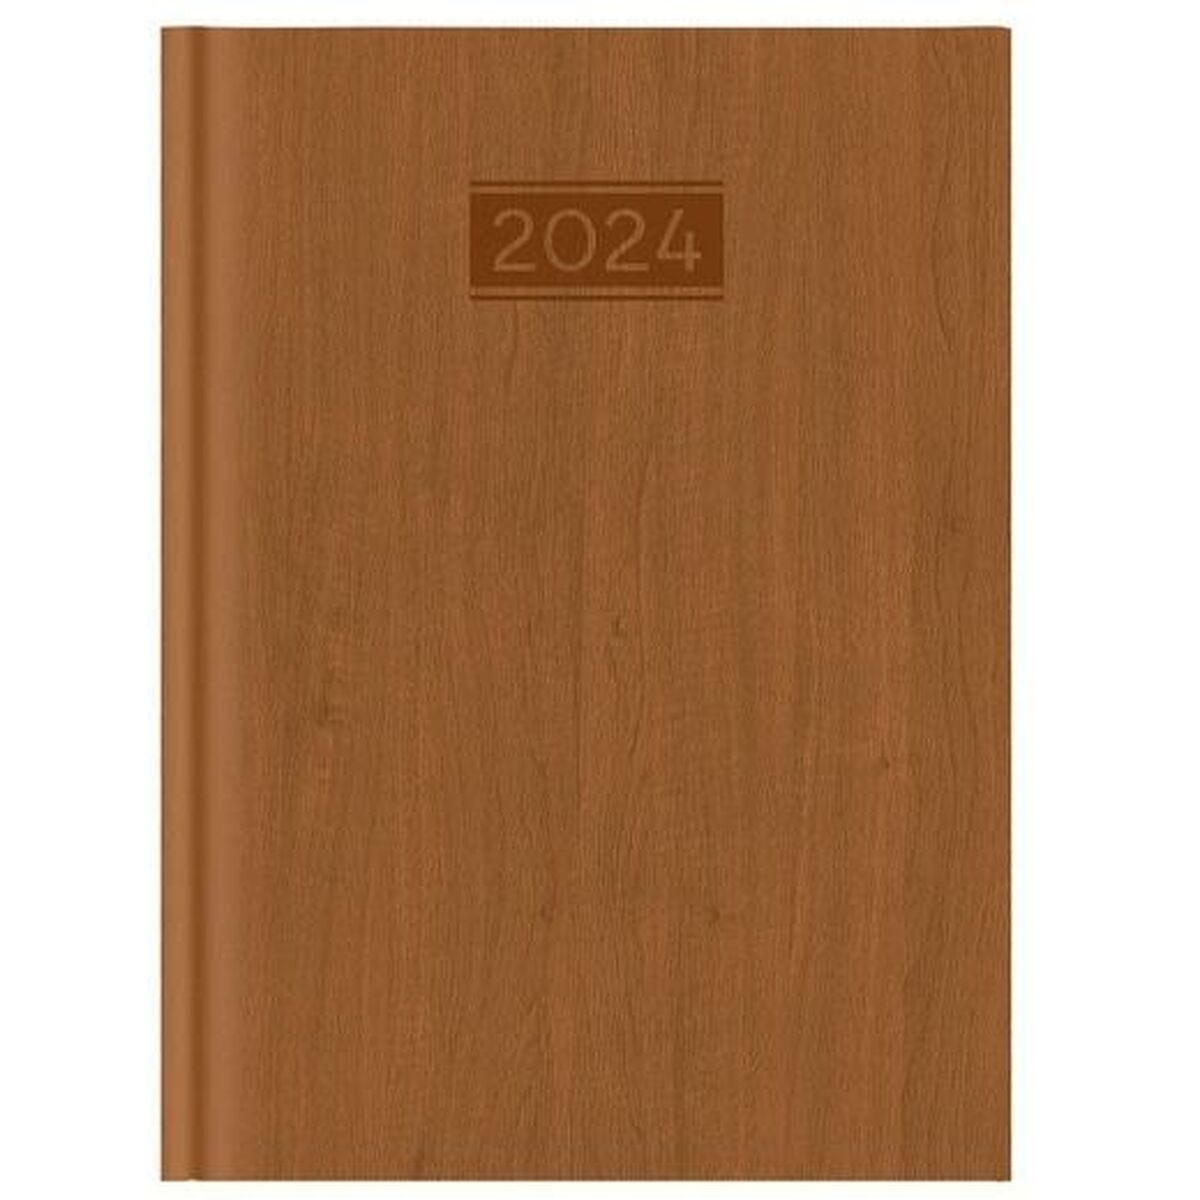 Diary Deusto Boost Vivione D43 2024 Brown 19,5 x 26,5 cm